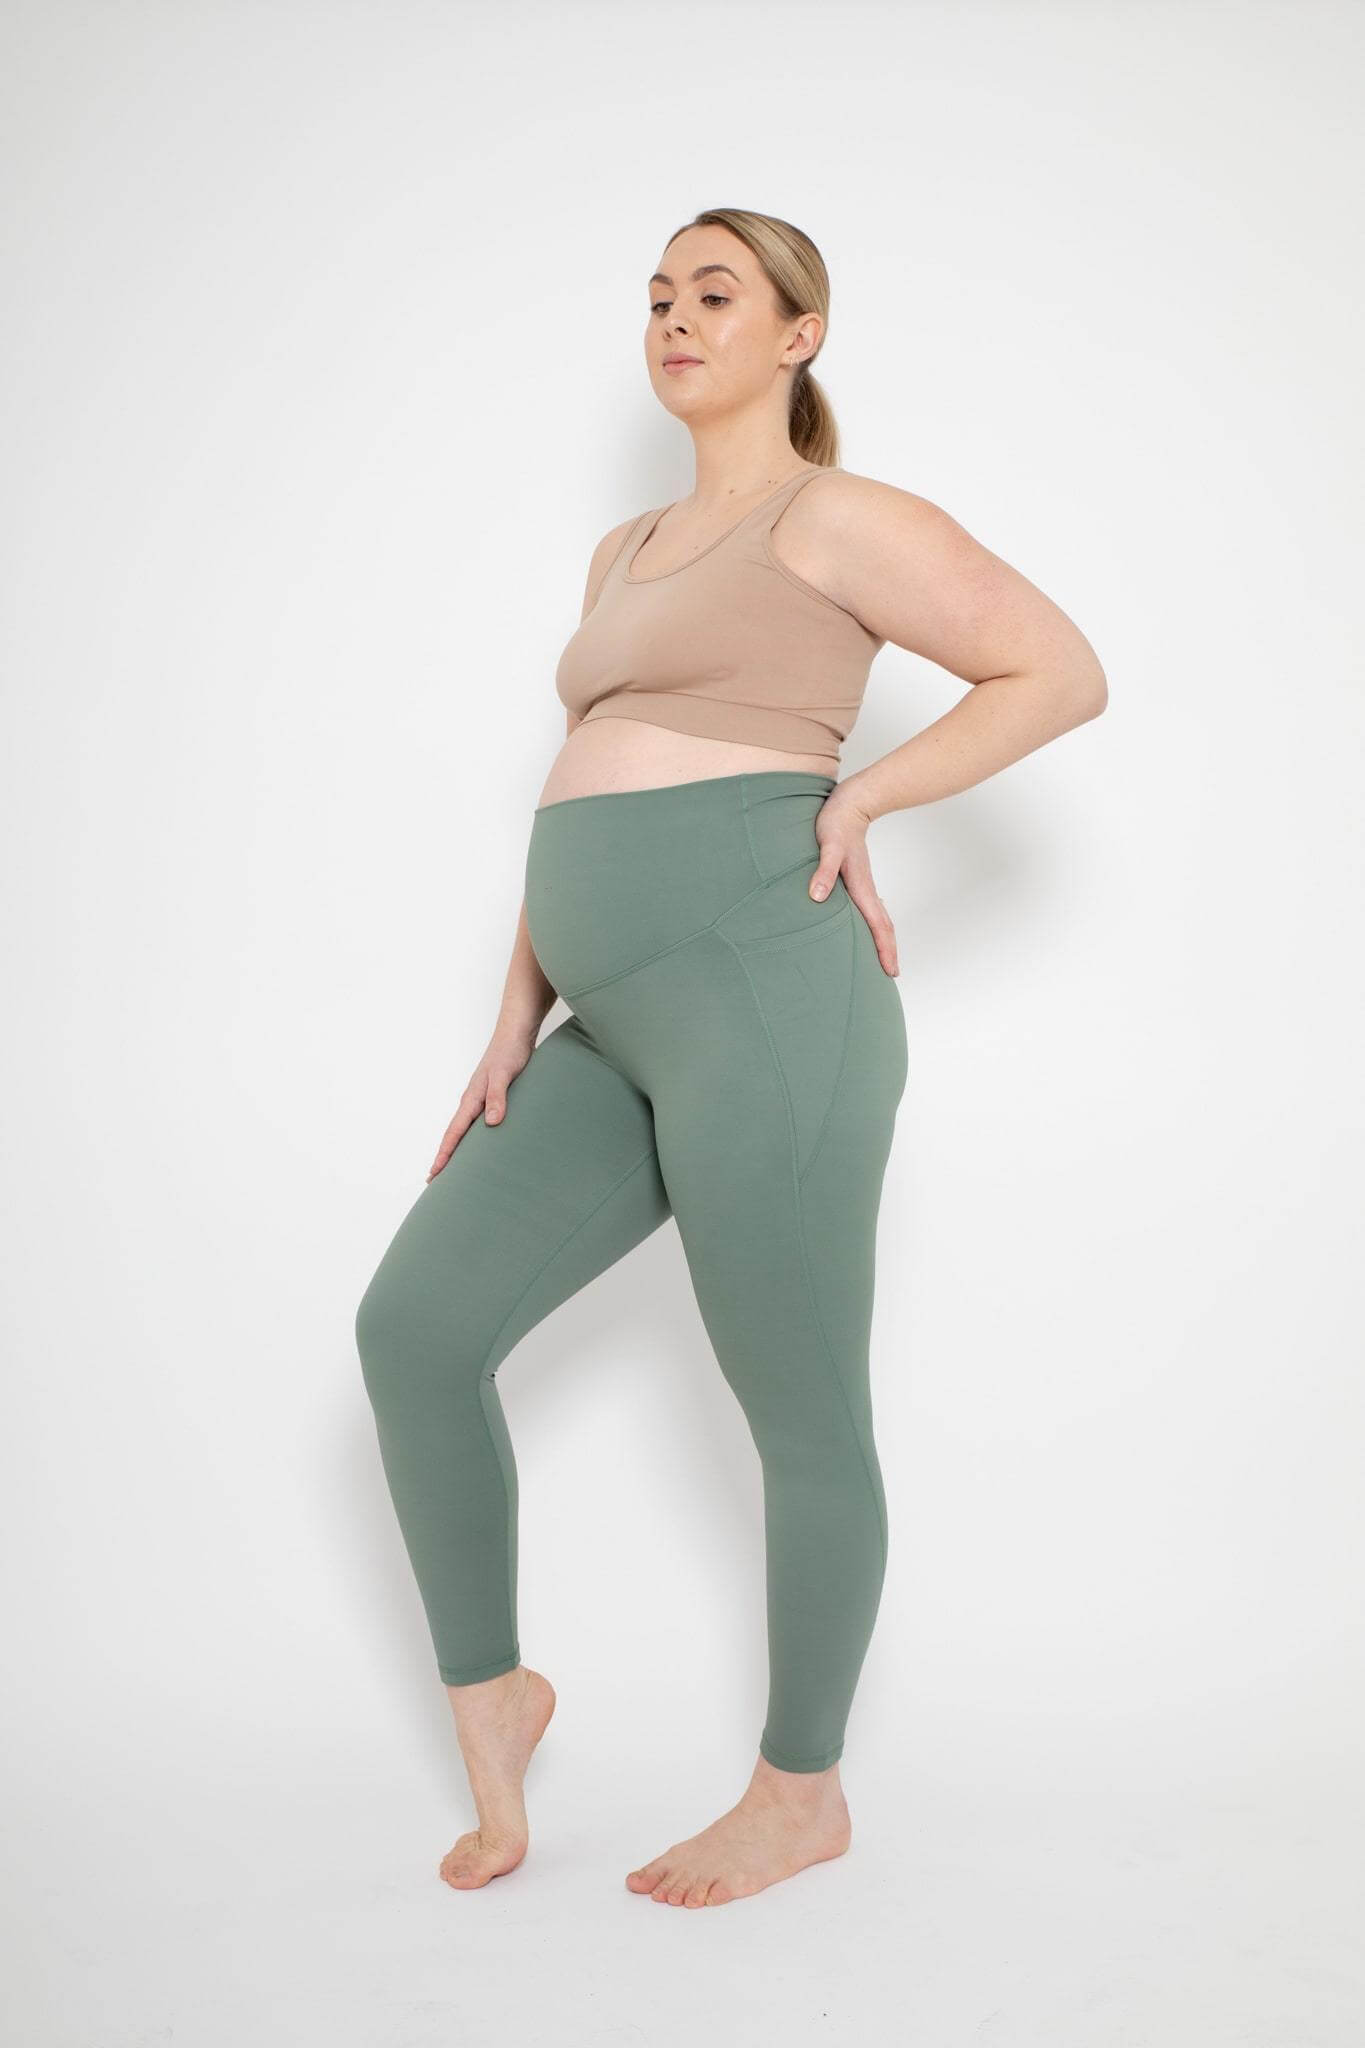 Green Maternity Gym Wear Leggings, The Lorena